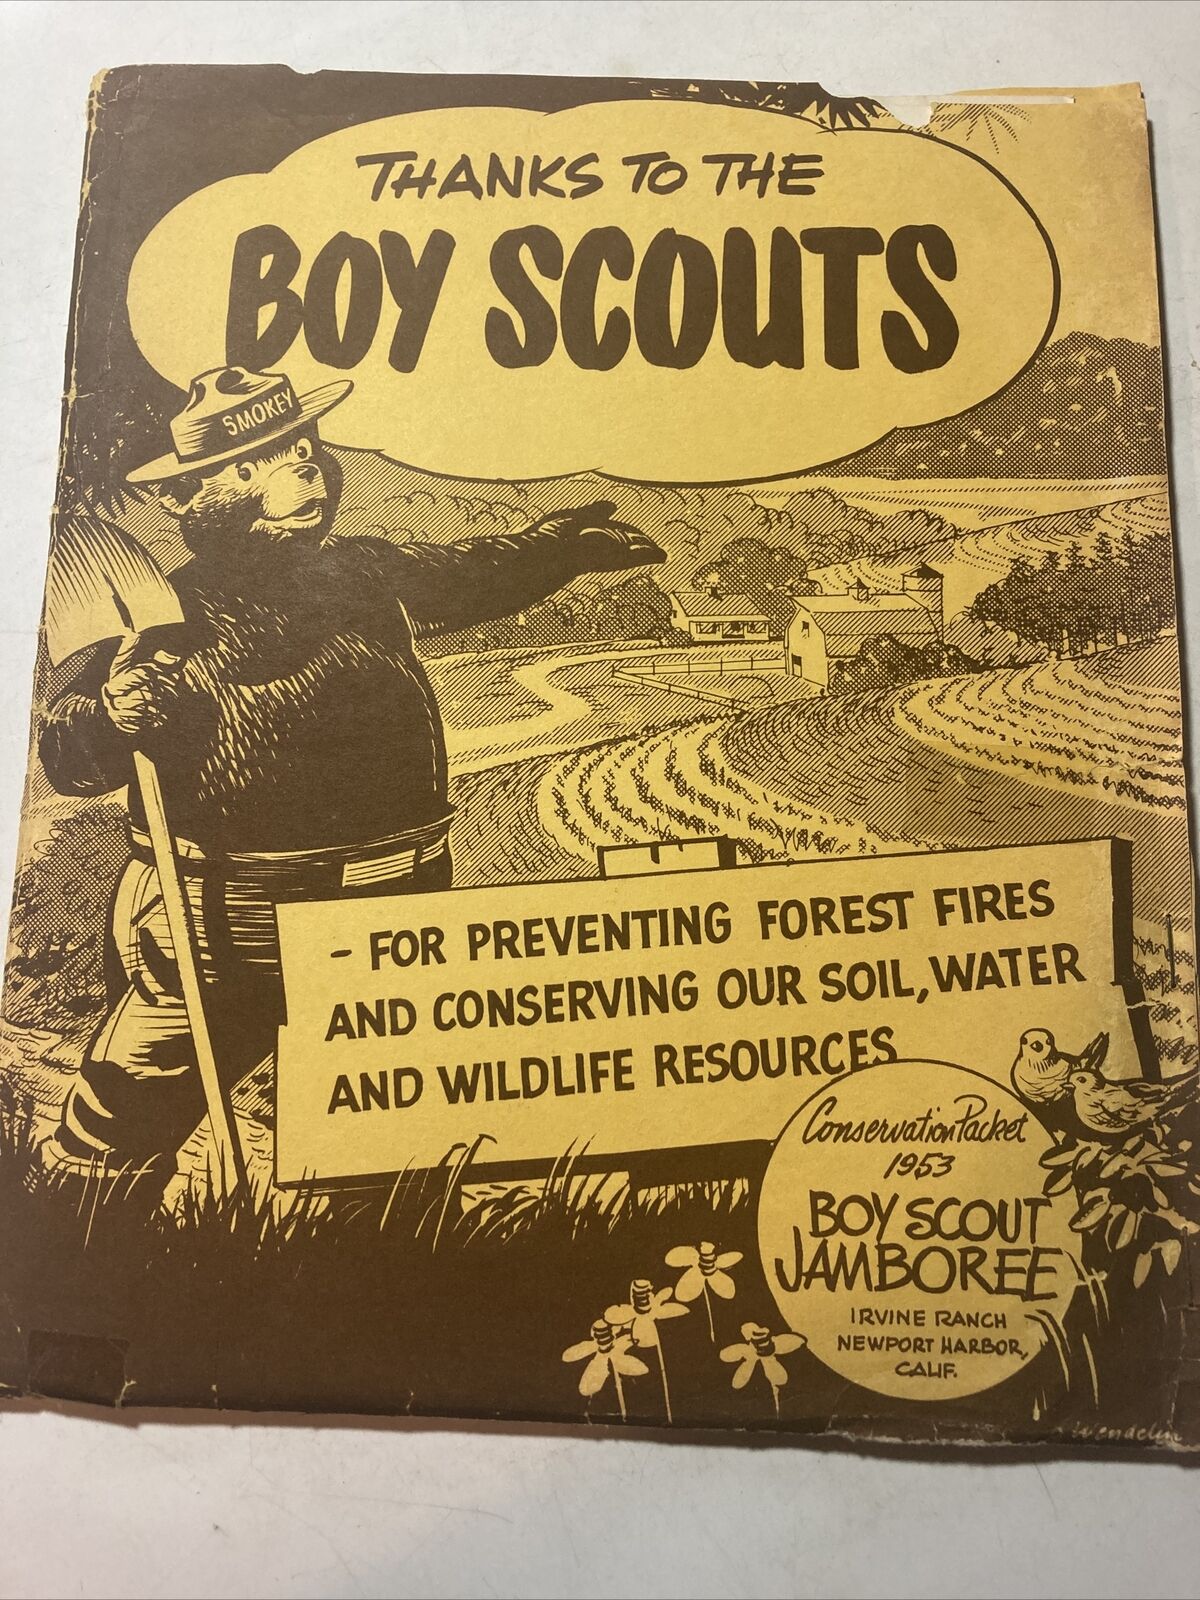 Boy Scout jamboree 1953 conservation pack Irvine Ranch Newport Harbor, CA Smokey